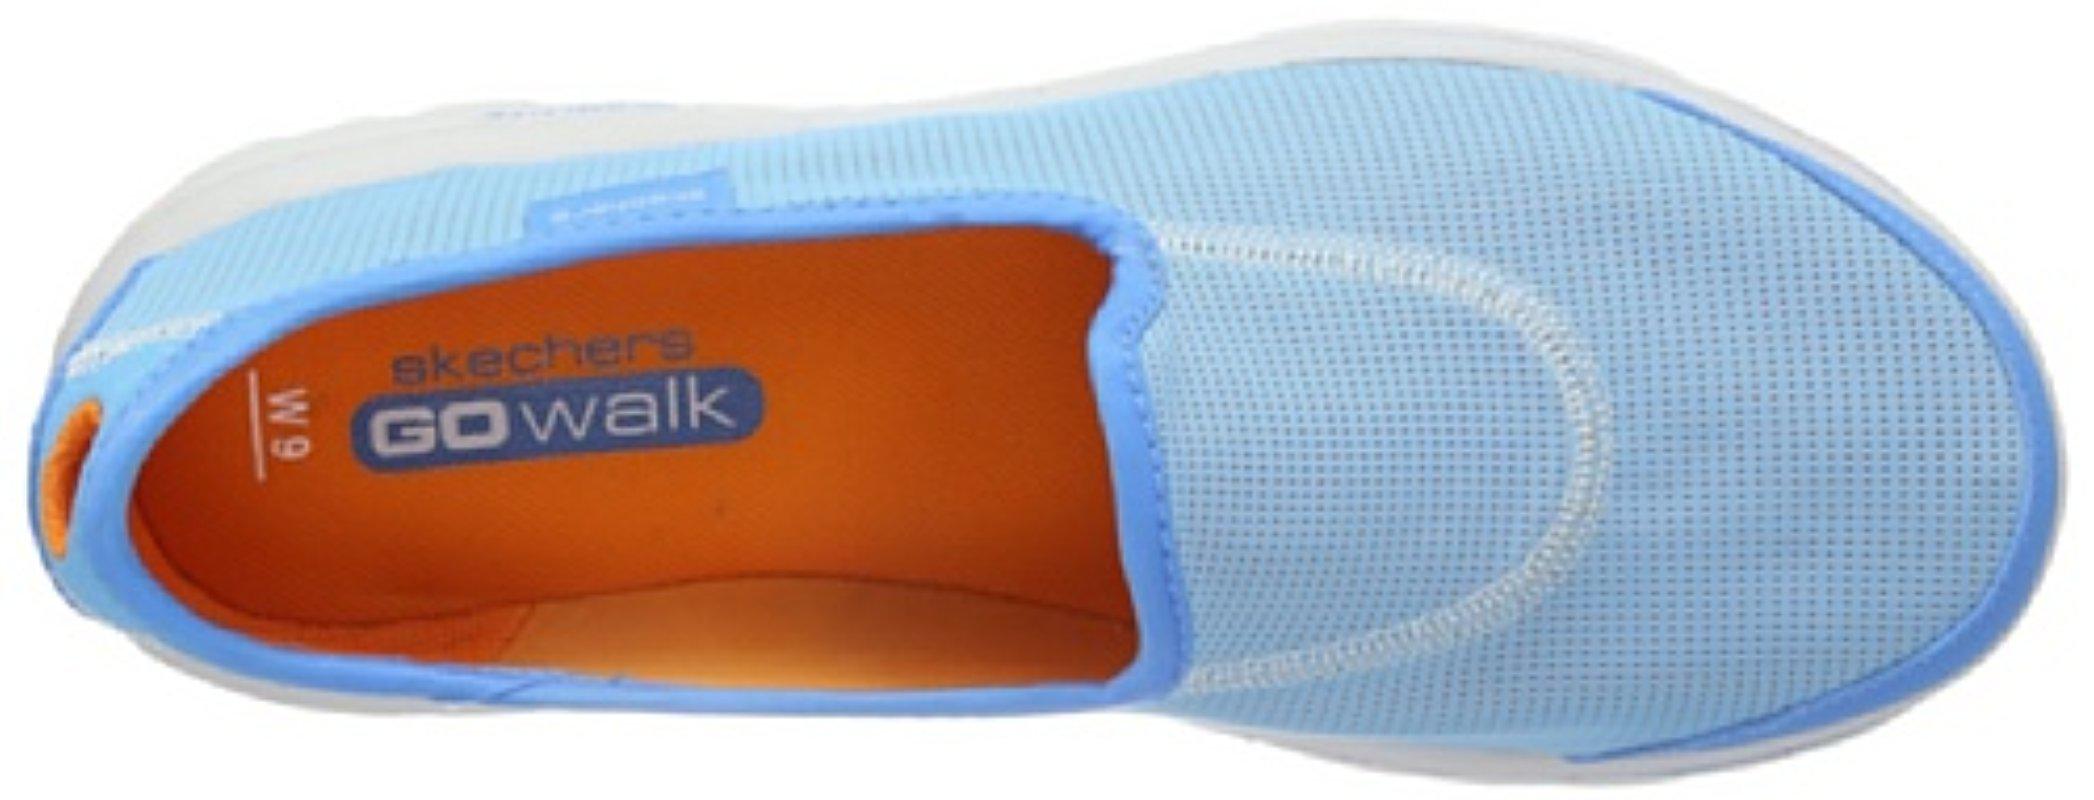 Flere Mania Imidlertid Skechers Performance Go Walk Recovery Slip-on in Blue/Orange (Blue) - Lyst